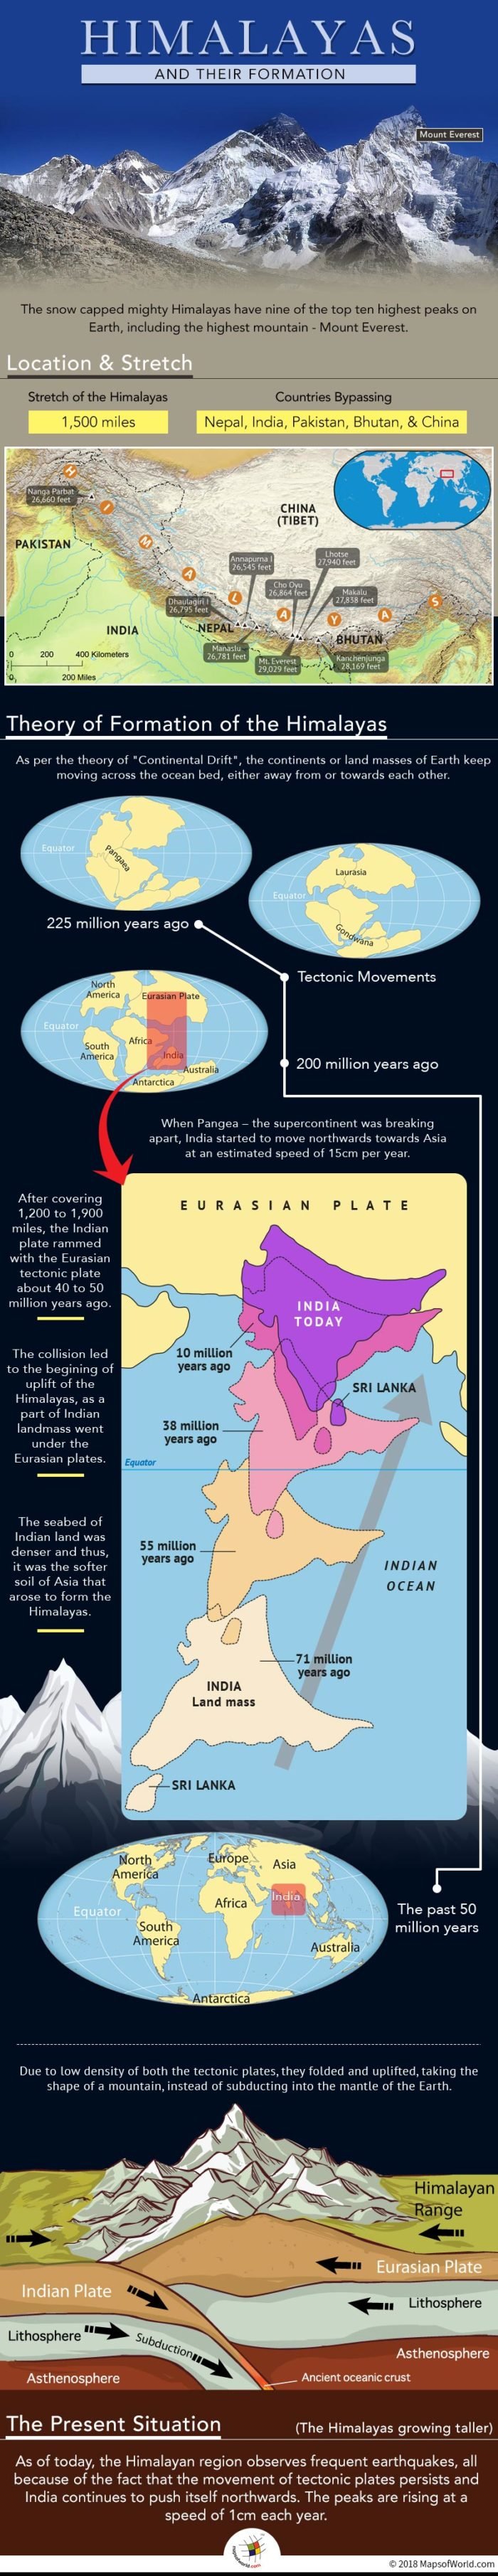 Infographic elaborating formation of Himalayas